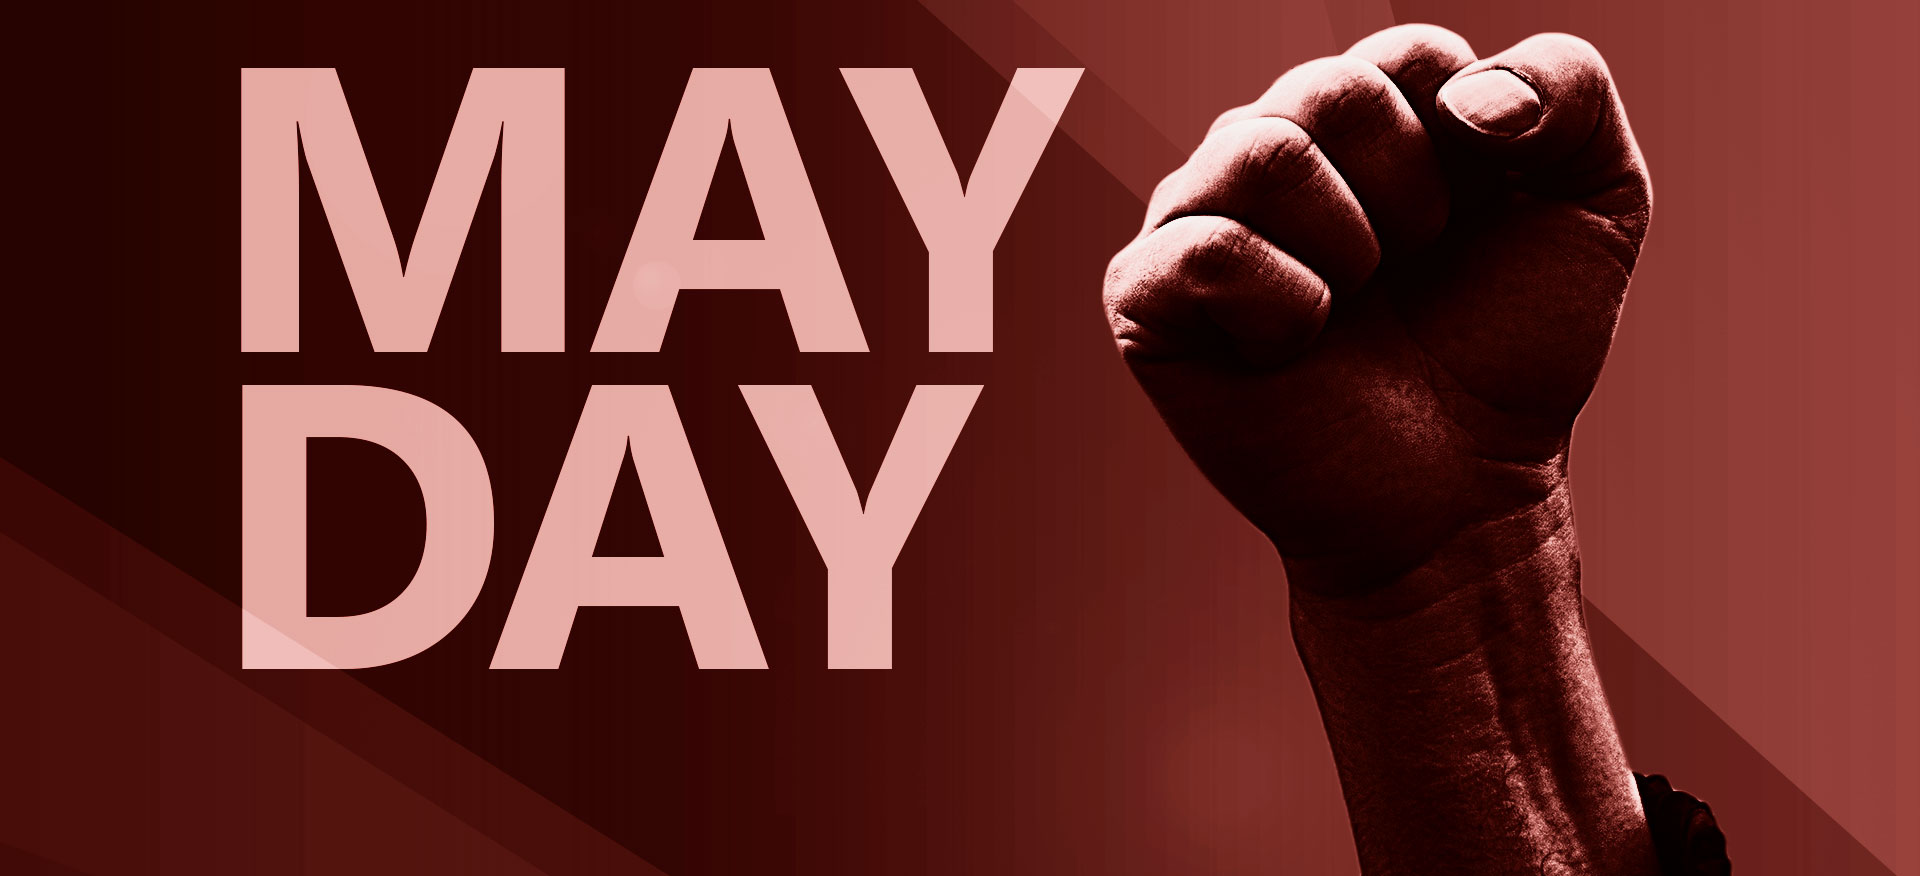 Happy May Day holiday